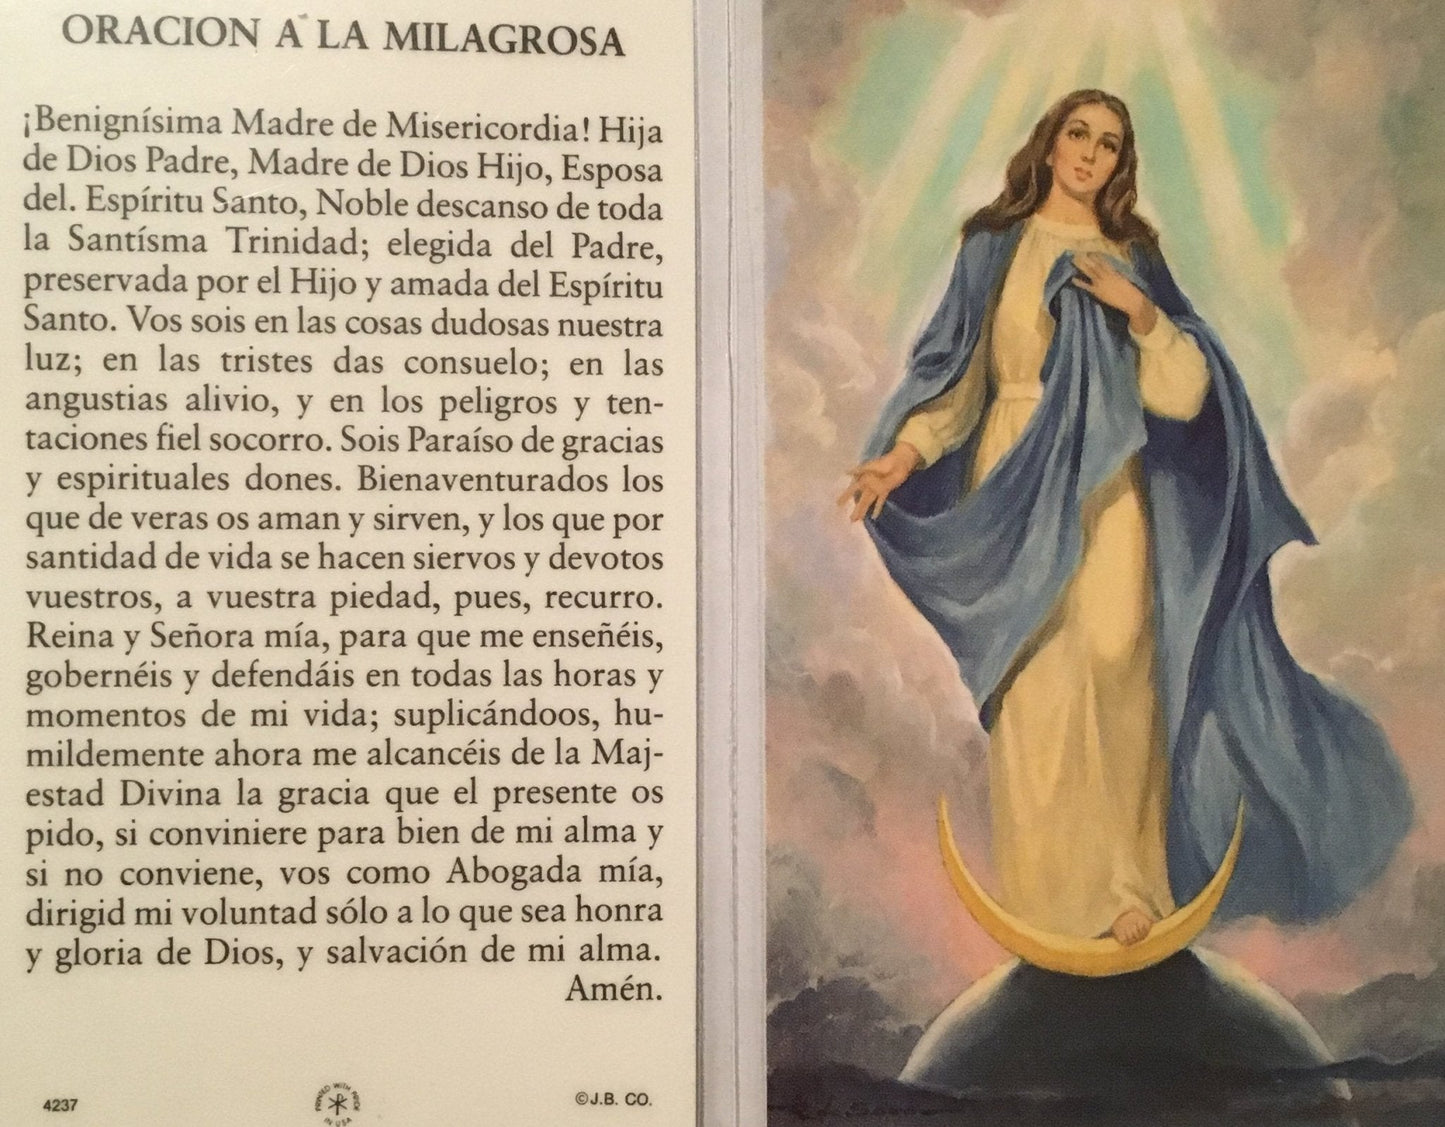 Prayer Card Oracion A La Milagrosa (Benignisima Madre De Misericordia) SPANISH No Laminated 4237 - Ysleta Mission Gift Shop- VOTED El Paso's Best Gift Shop